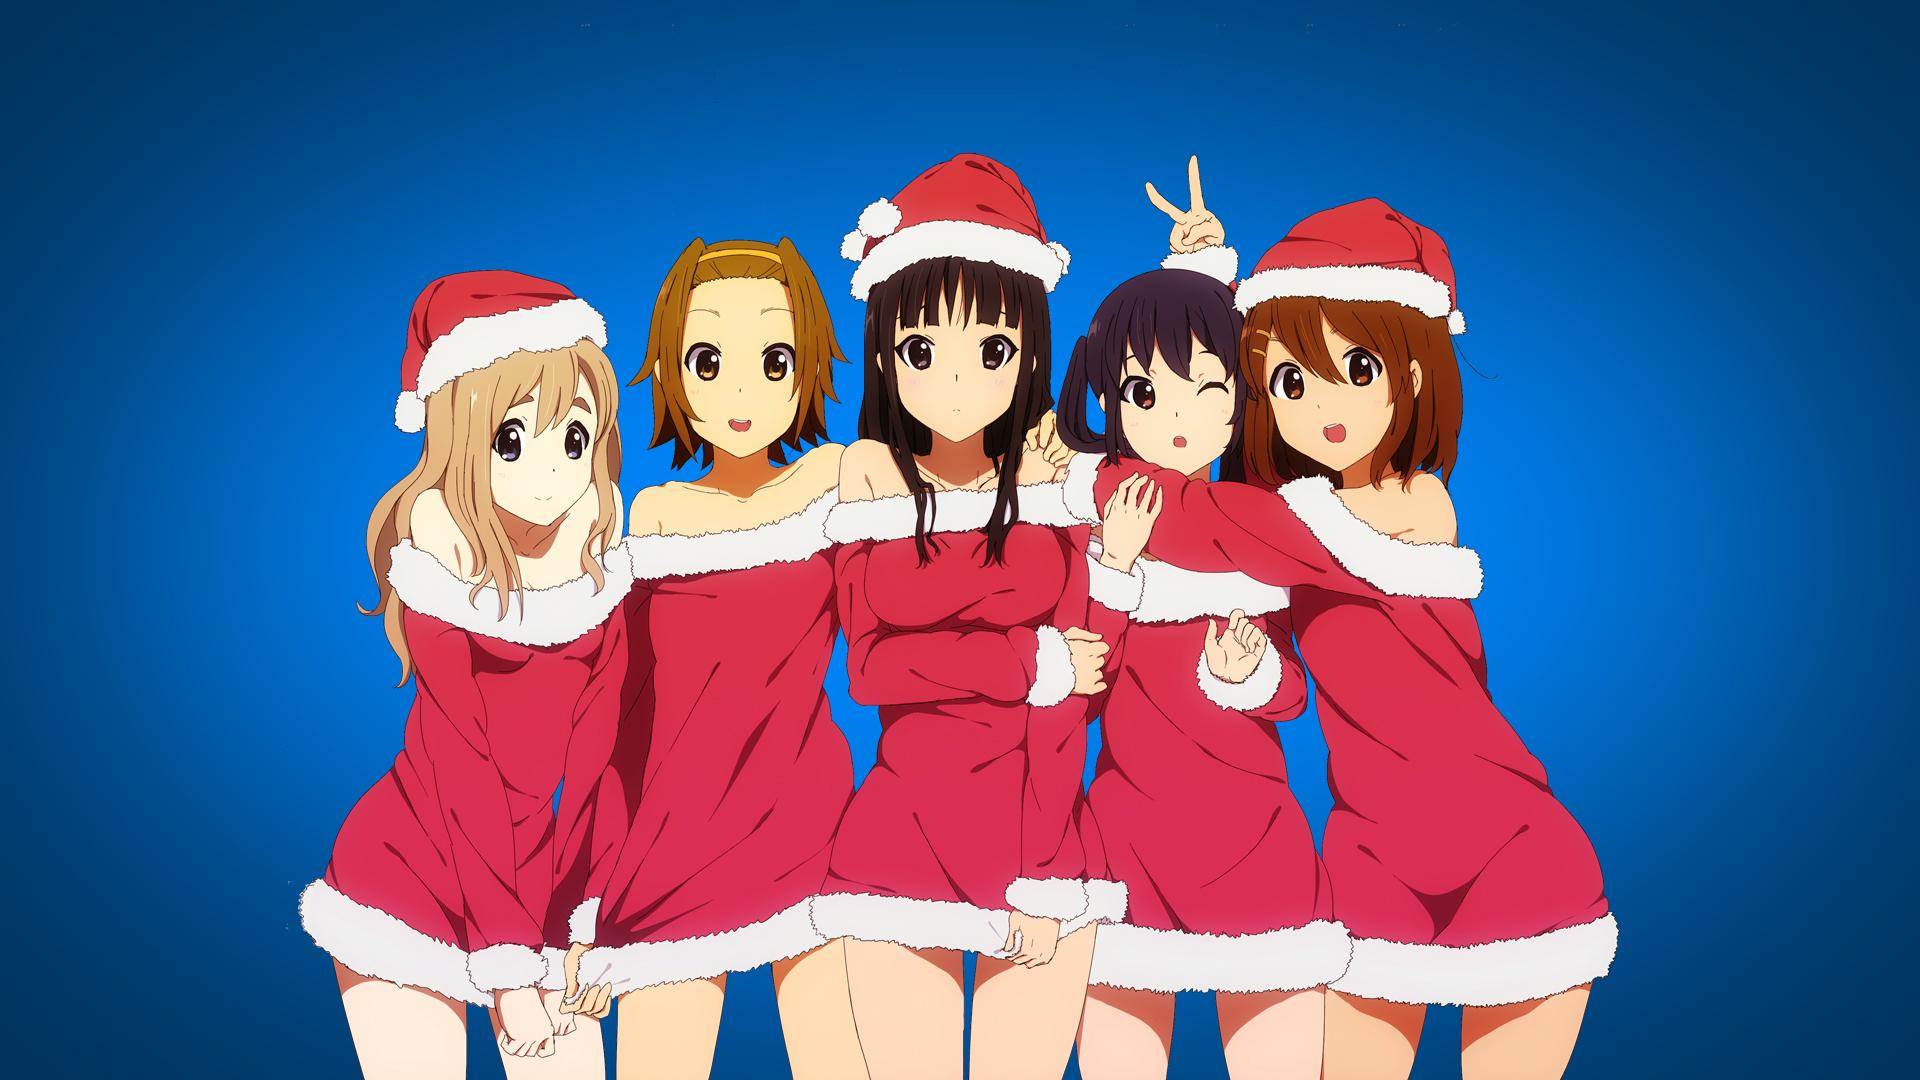 free skin wallpaper: Christmas Theme Background Anime